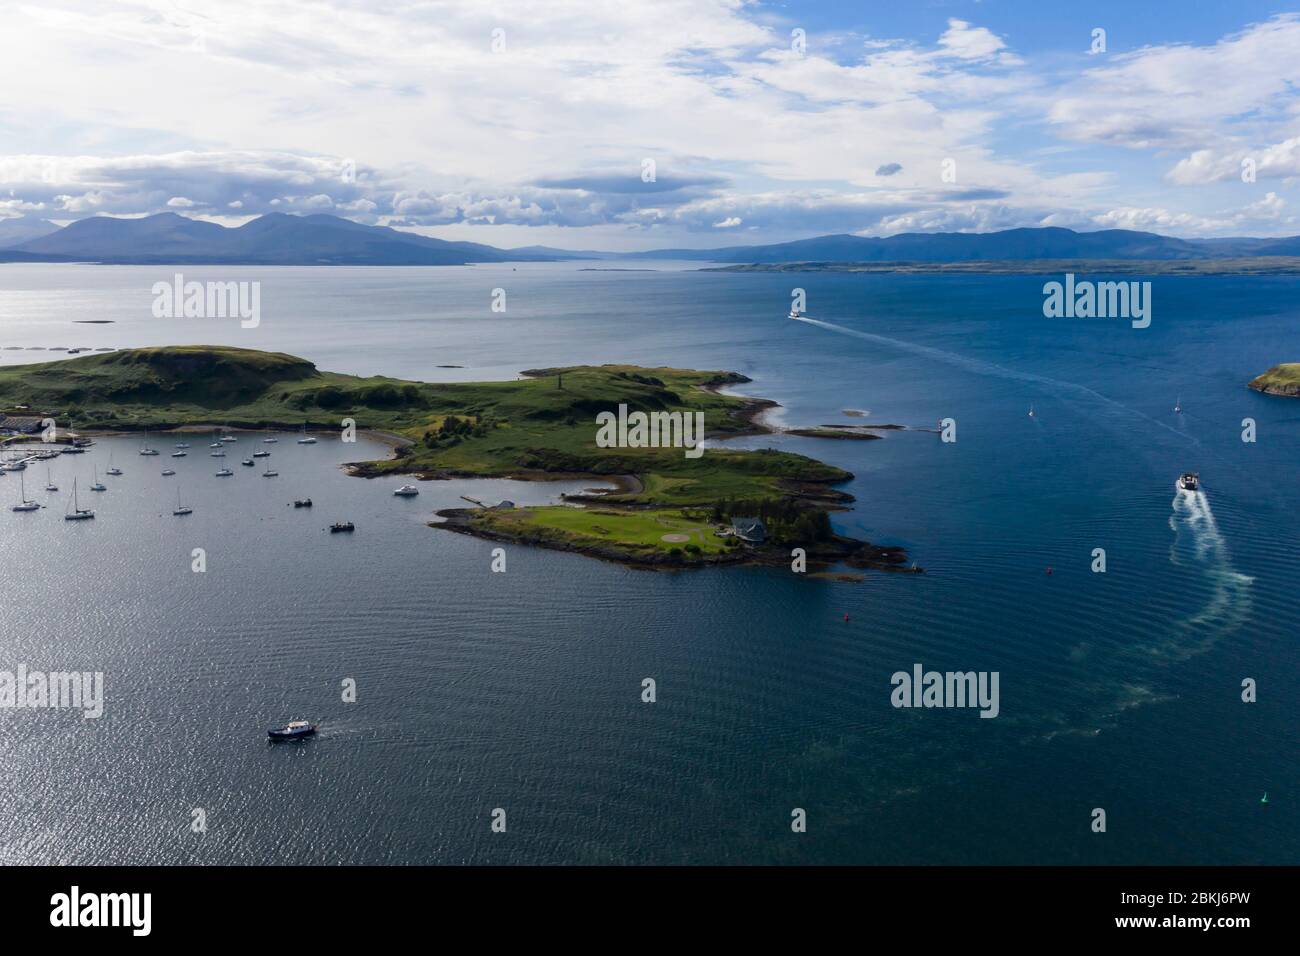 United Kingdom, Scotland, West Highland region, Argyll and Bute, Strathclyde region, Oban, Sound of Kerrera (aerial view) Stock Photo